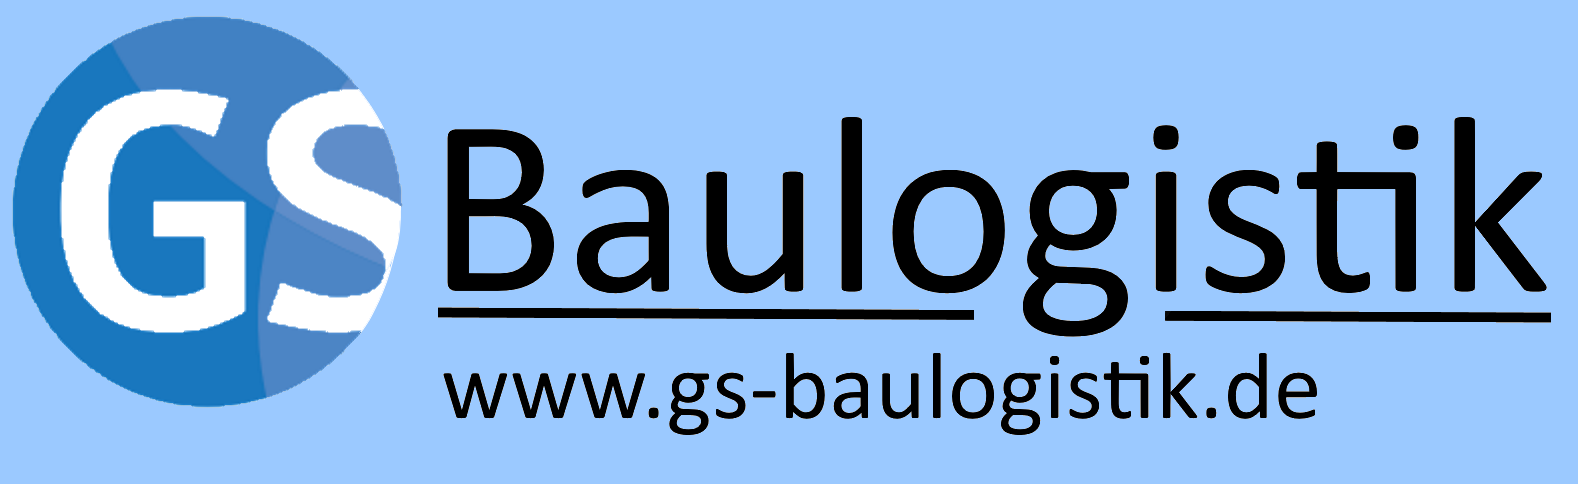 GS-Baulogistik